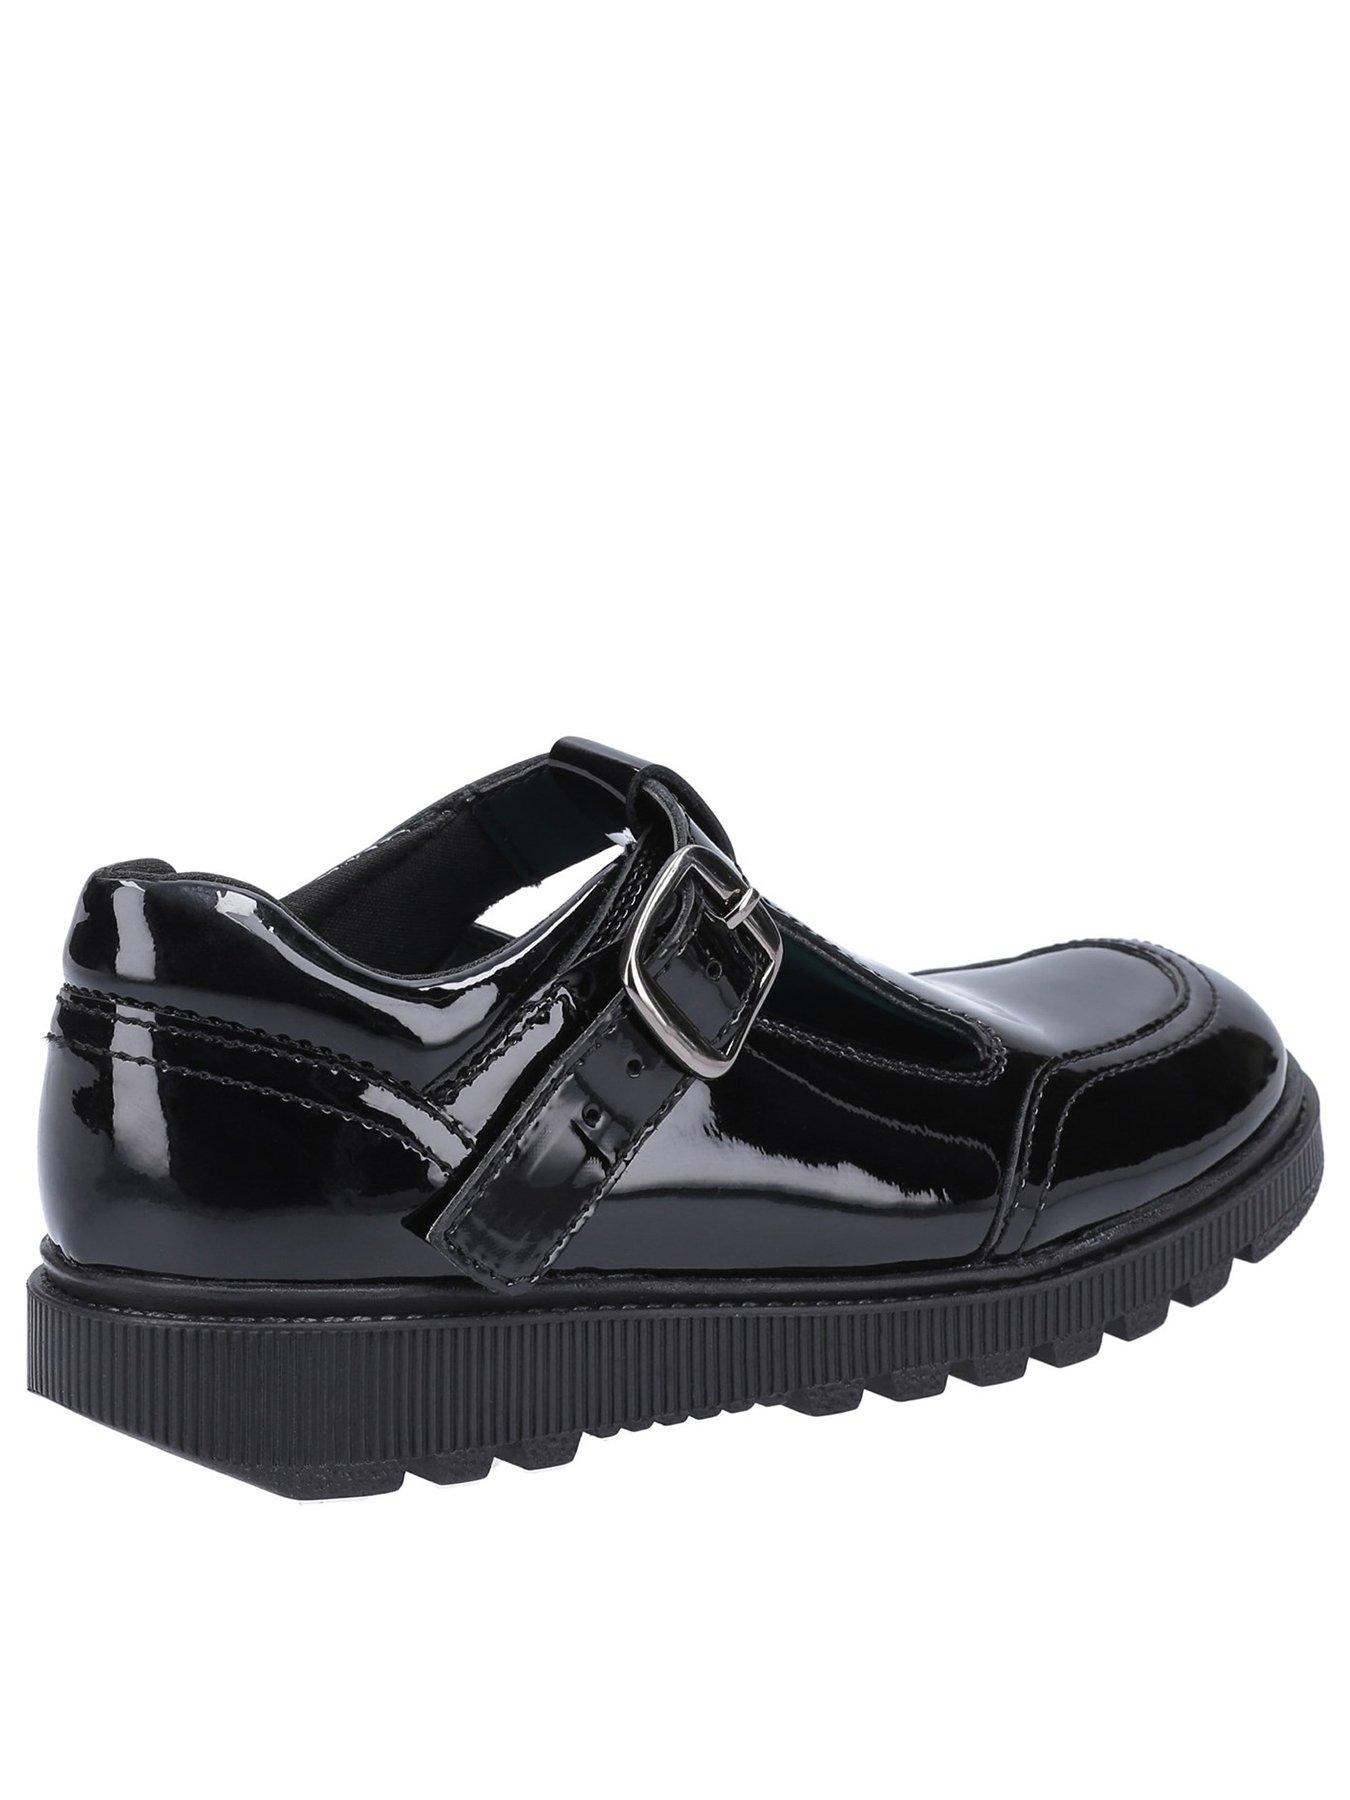  Kerry Junior Patent School Shoes - Black